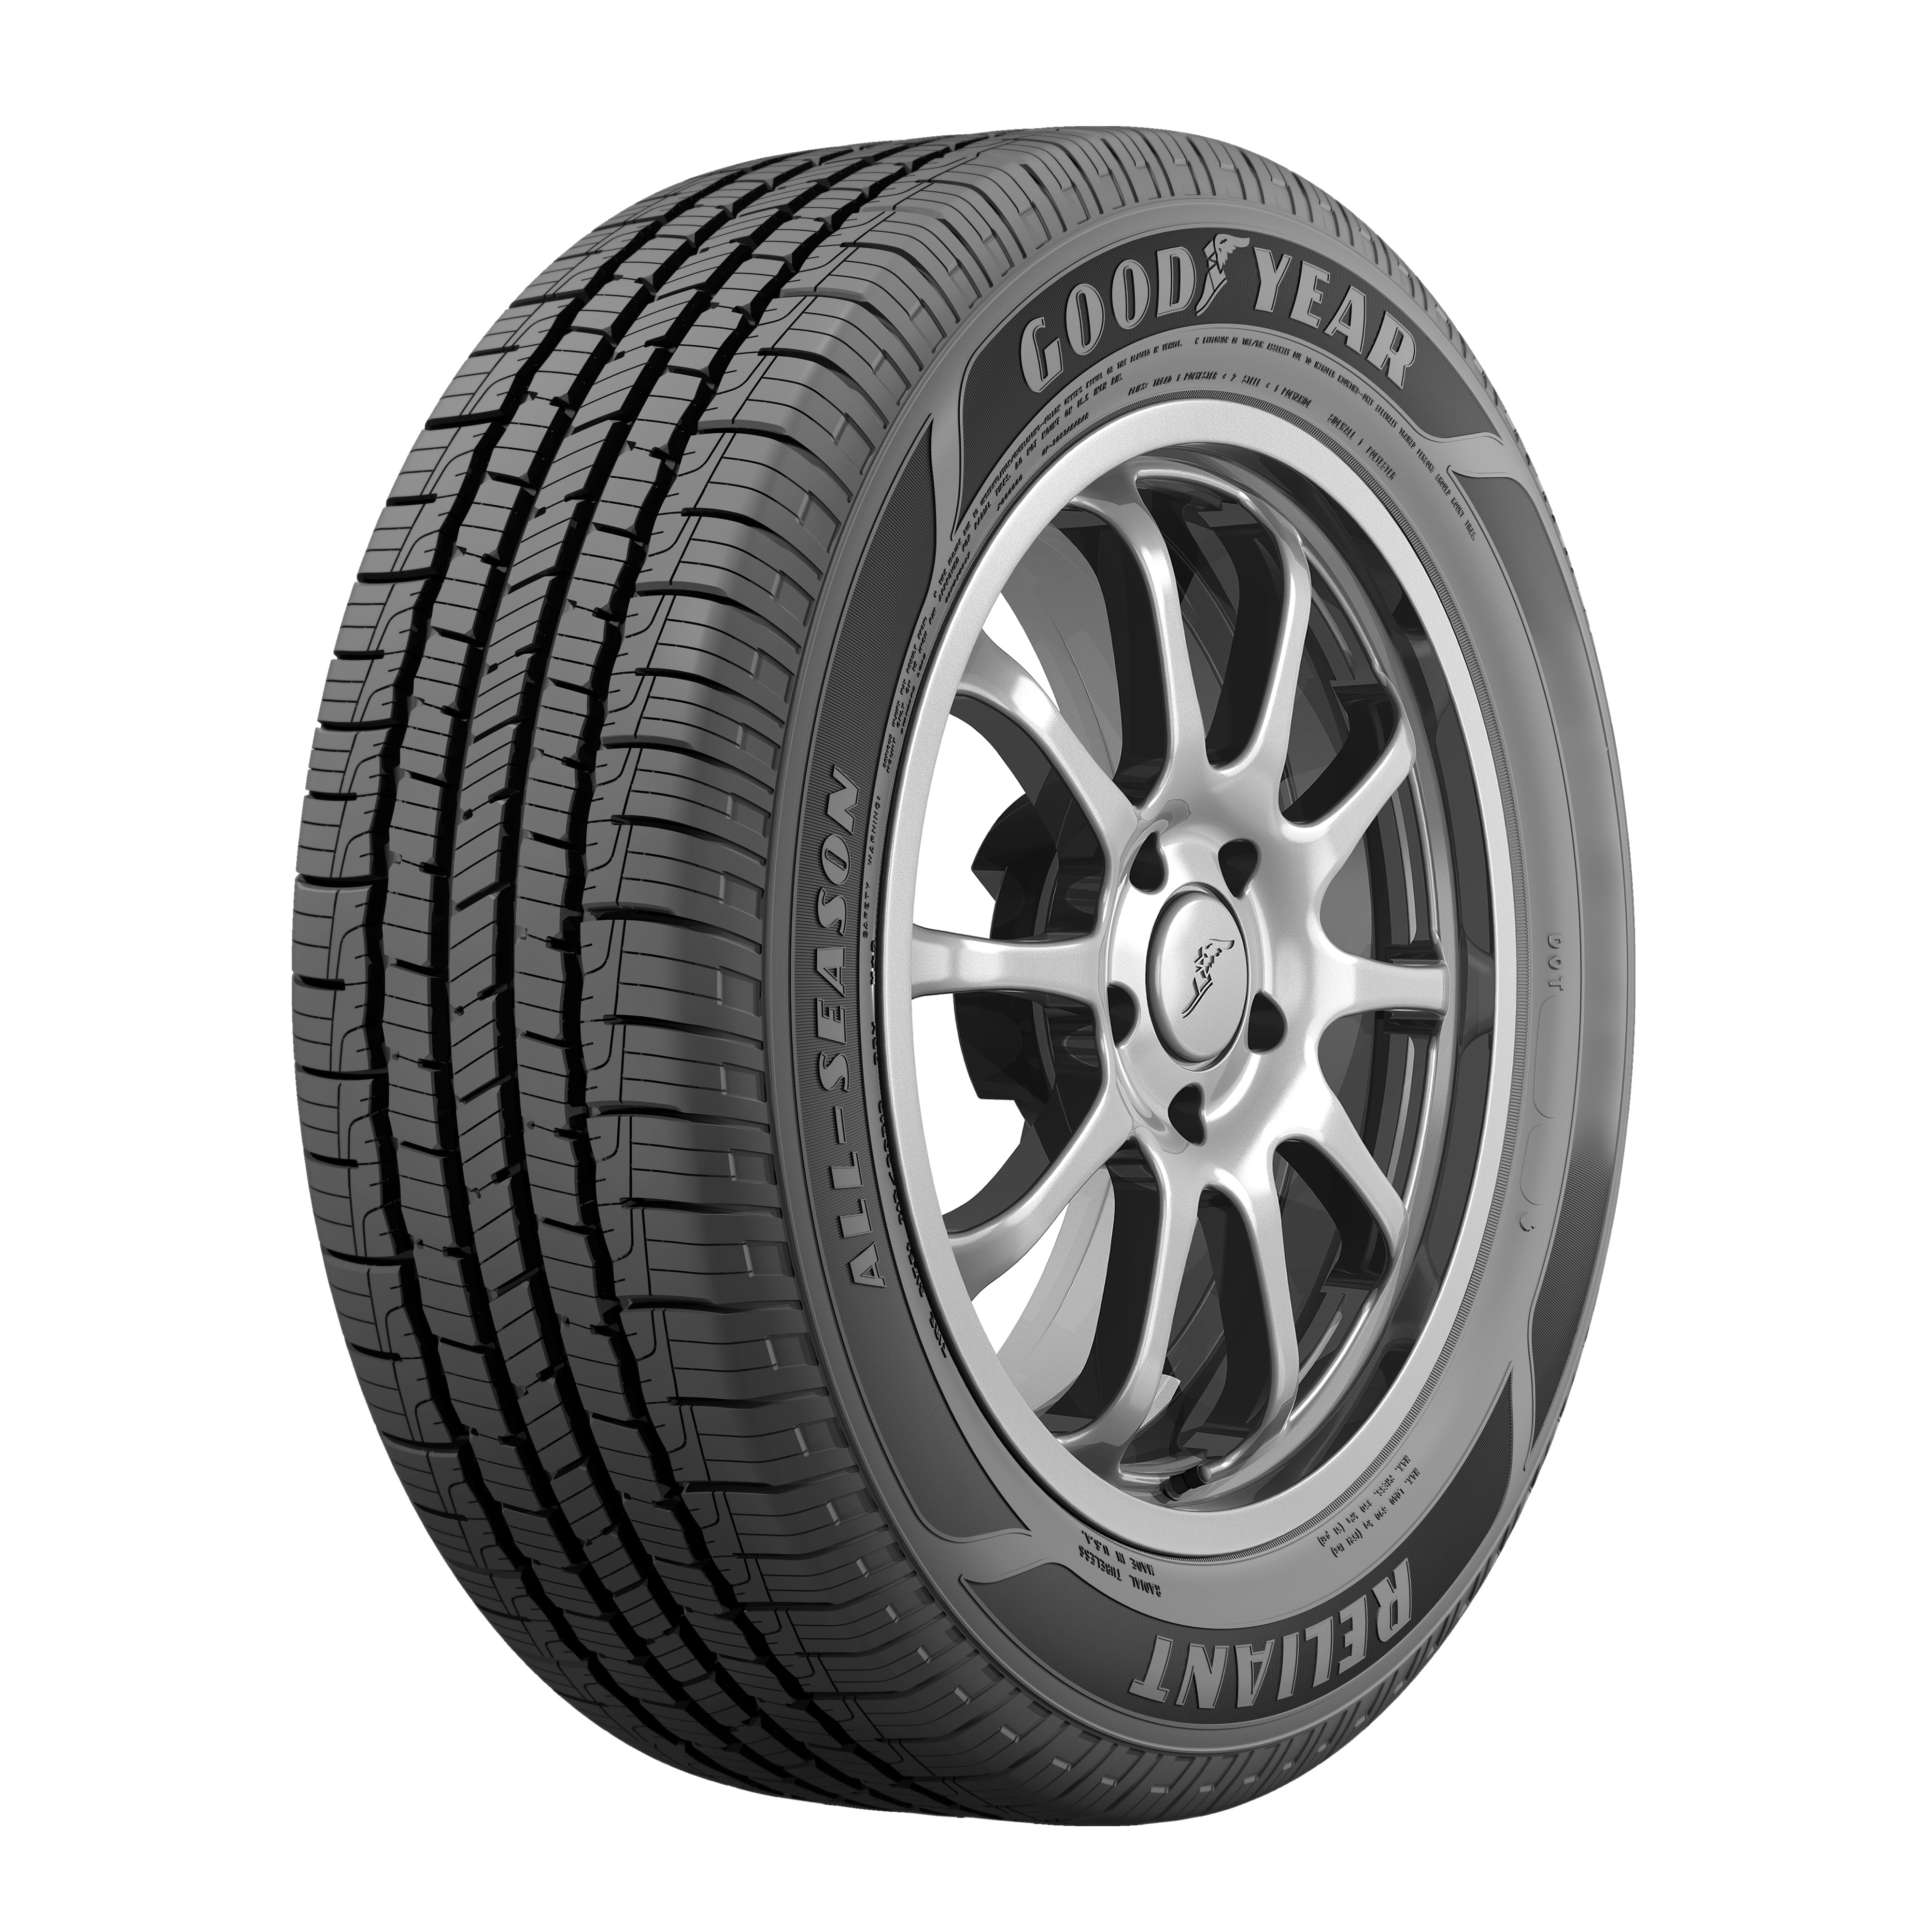 94V All-Season Tire Reliant Car Goodyear 225/50R17 All-Season Passenger